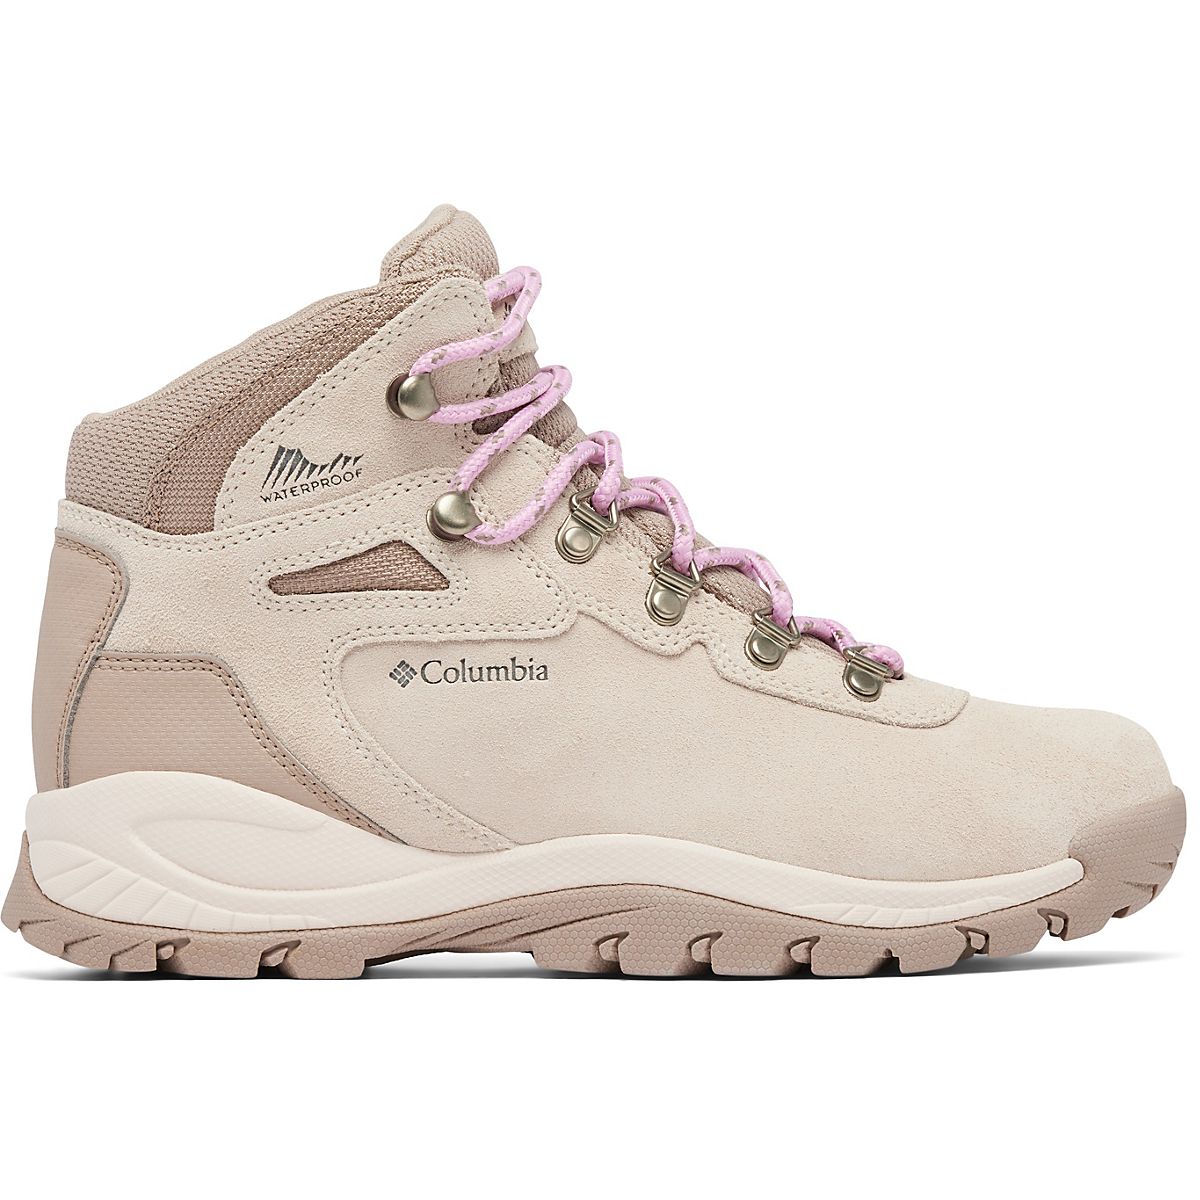 Columbia Sportswear Women's Newton Ridge Plus Waterproof Amped Hiking Boots $45.97